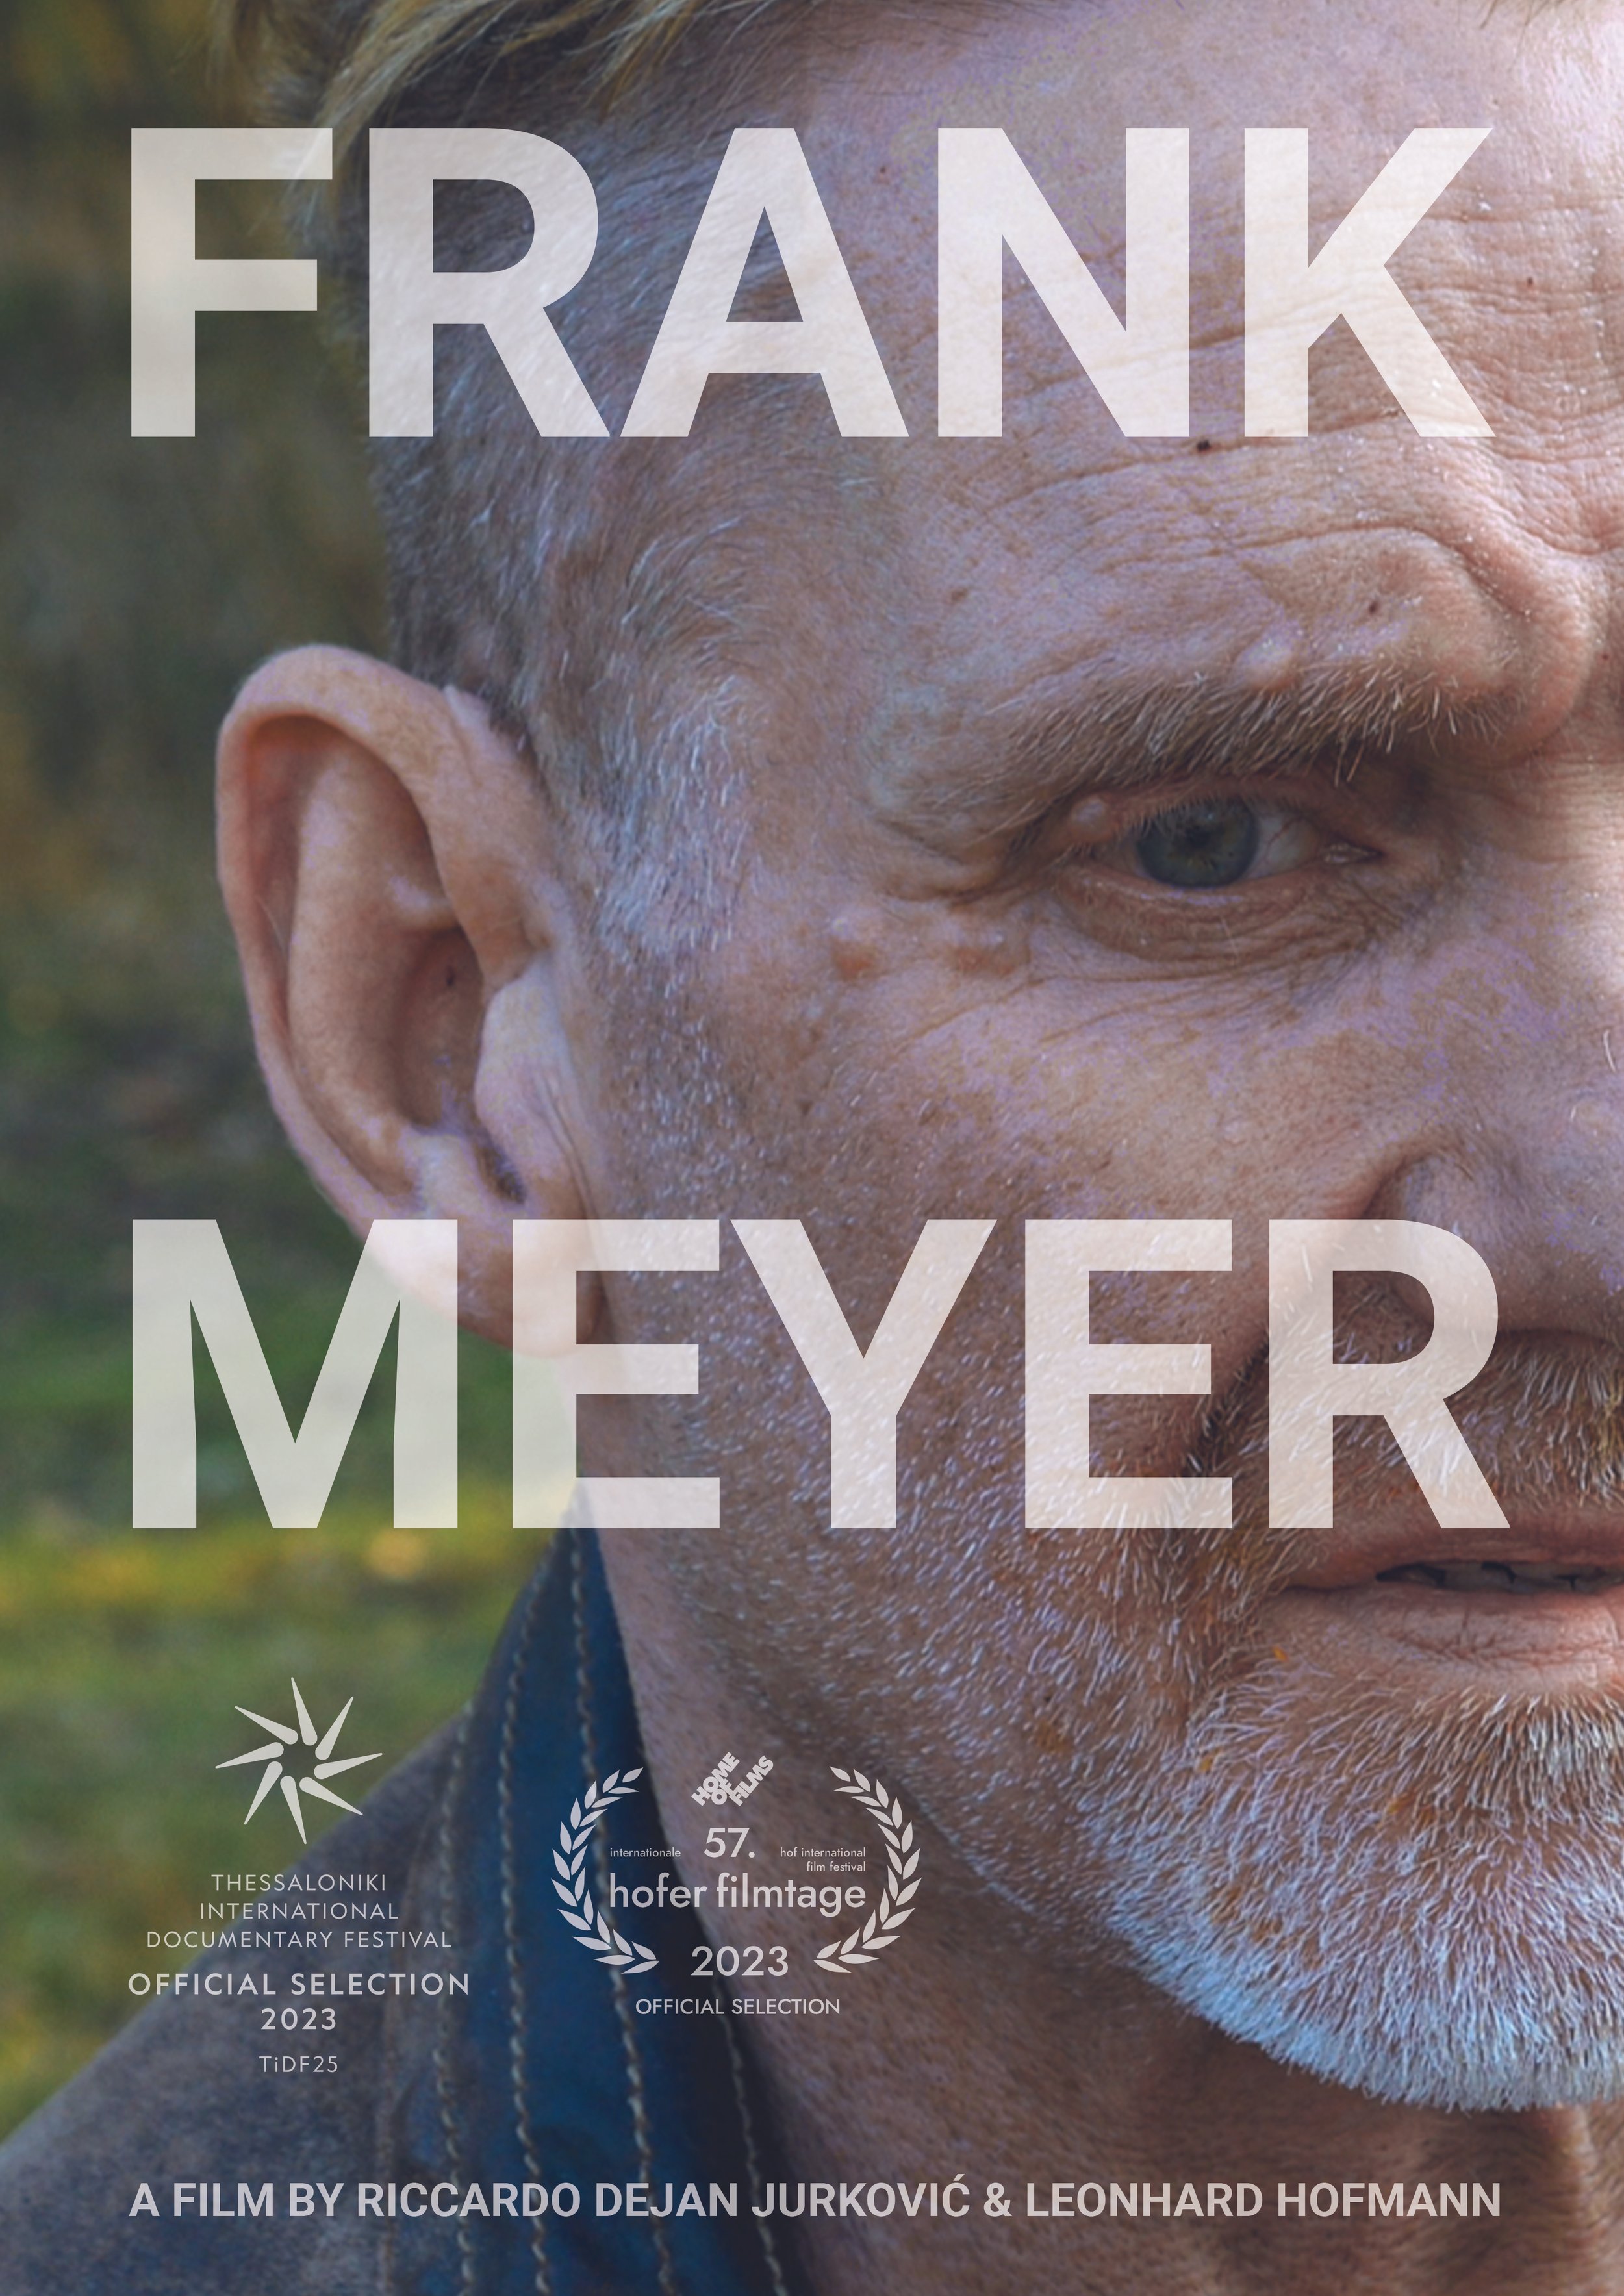 Frank Meyer